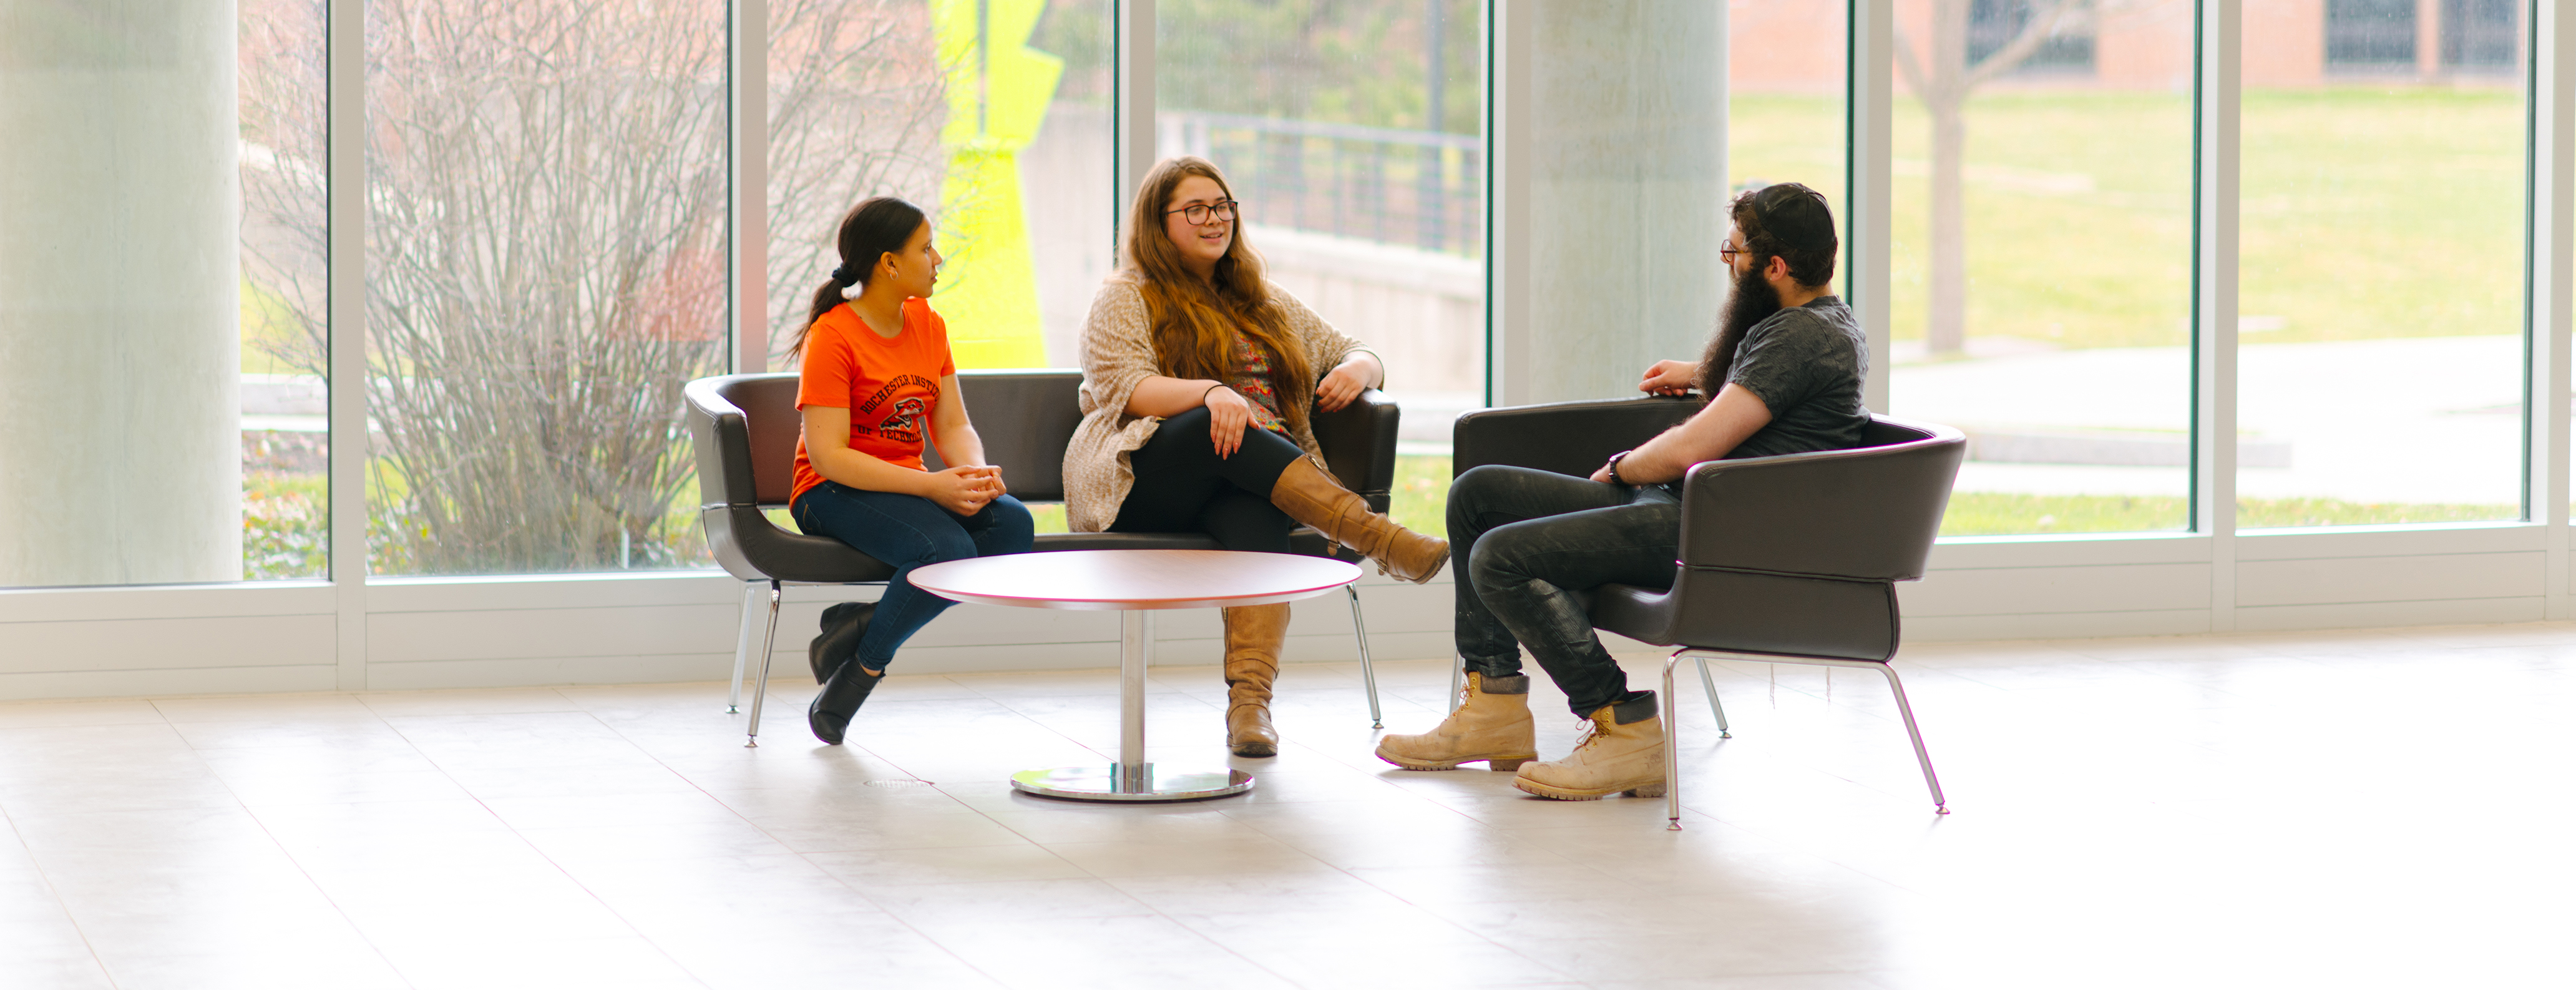 Three students sitting and talking.